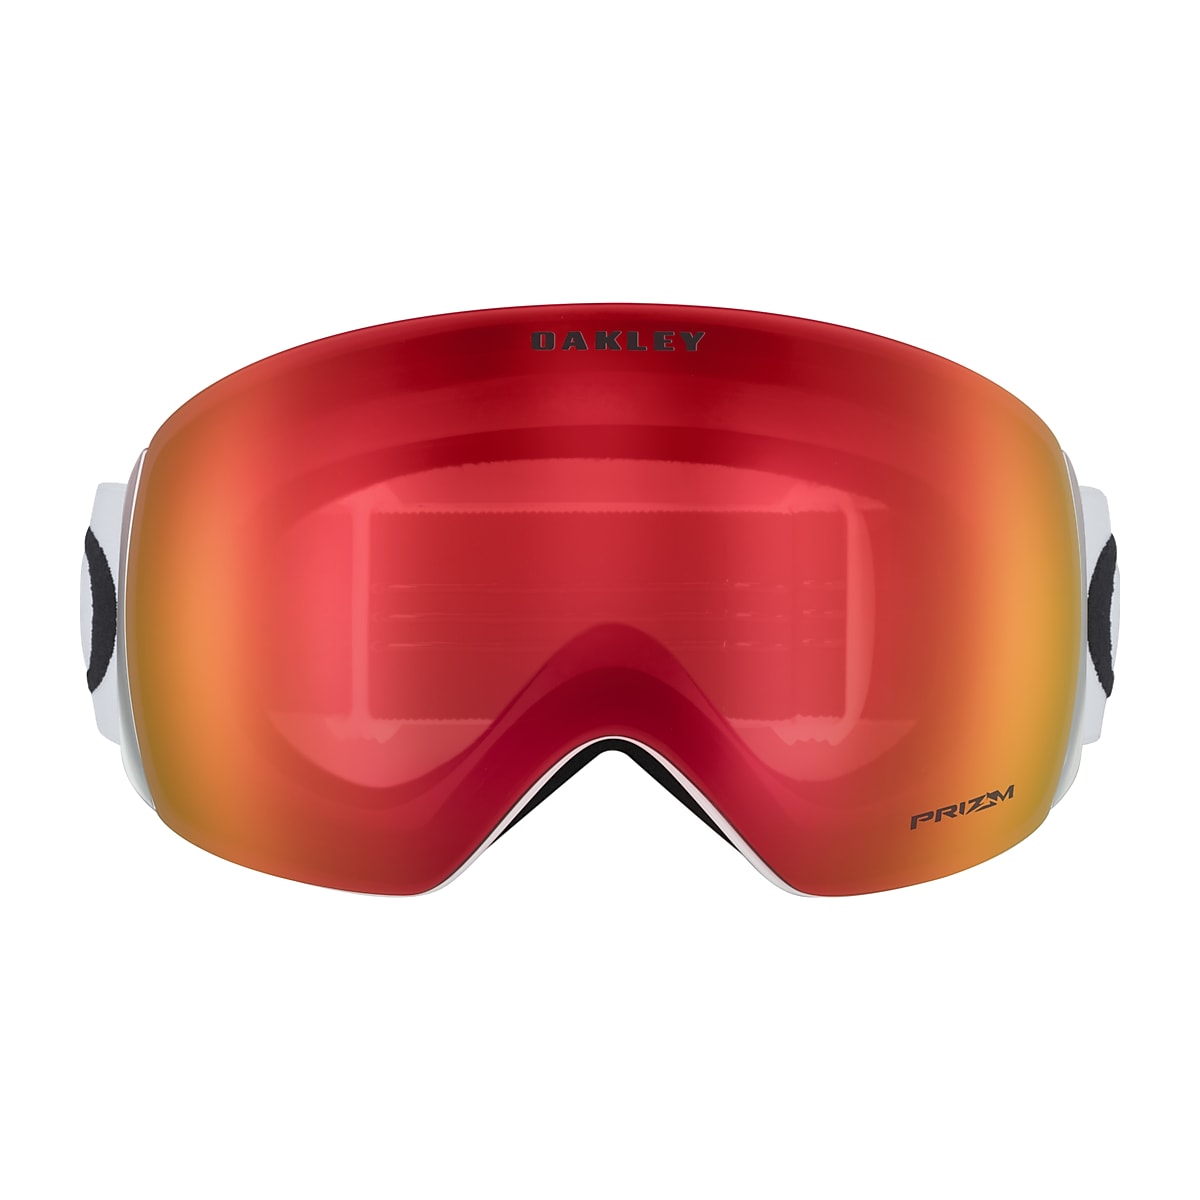 Oakley Flight Deck™ L Snow Goggles - Matte White - Prizm Snow Torch Iridium  - OO7050-35 | Oakley US Store